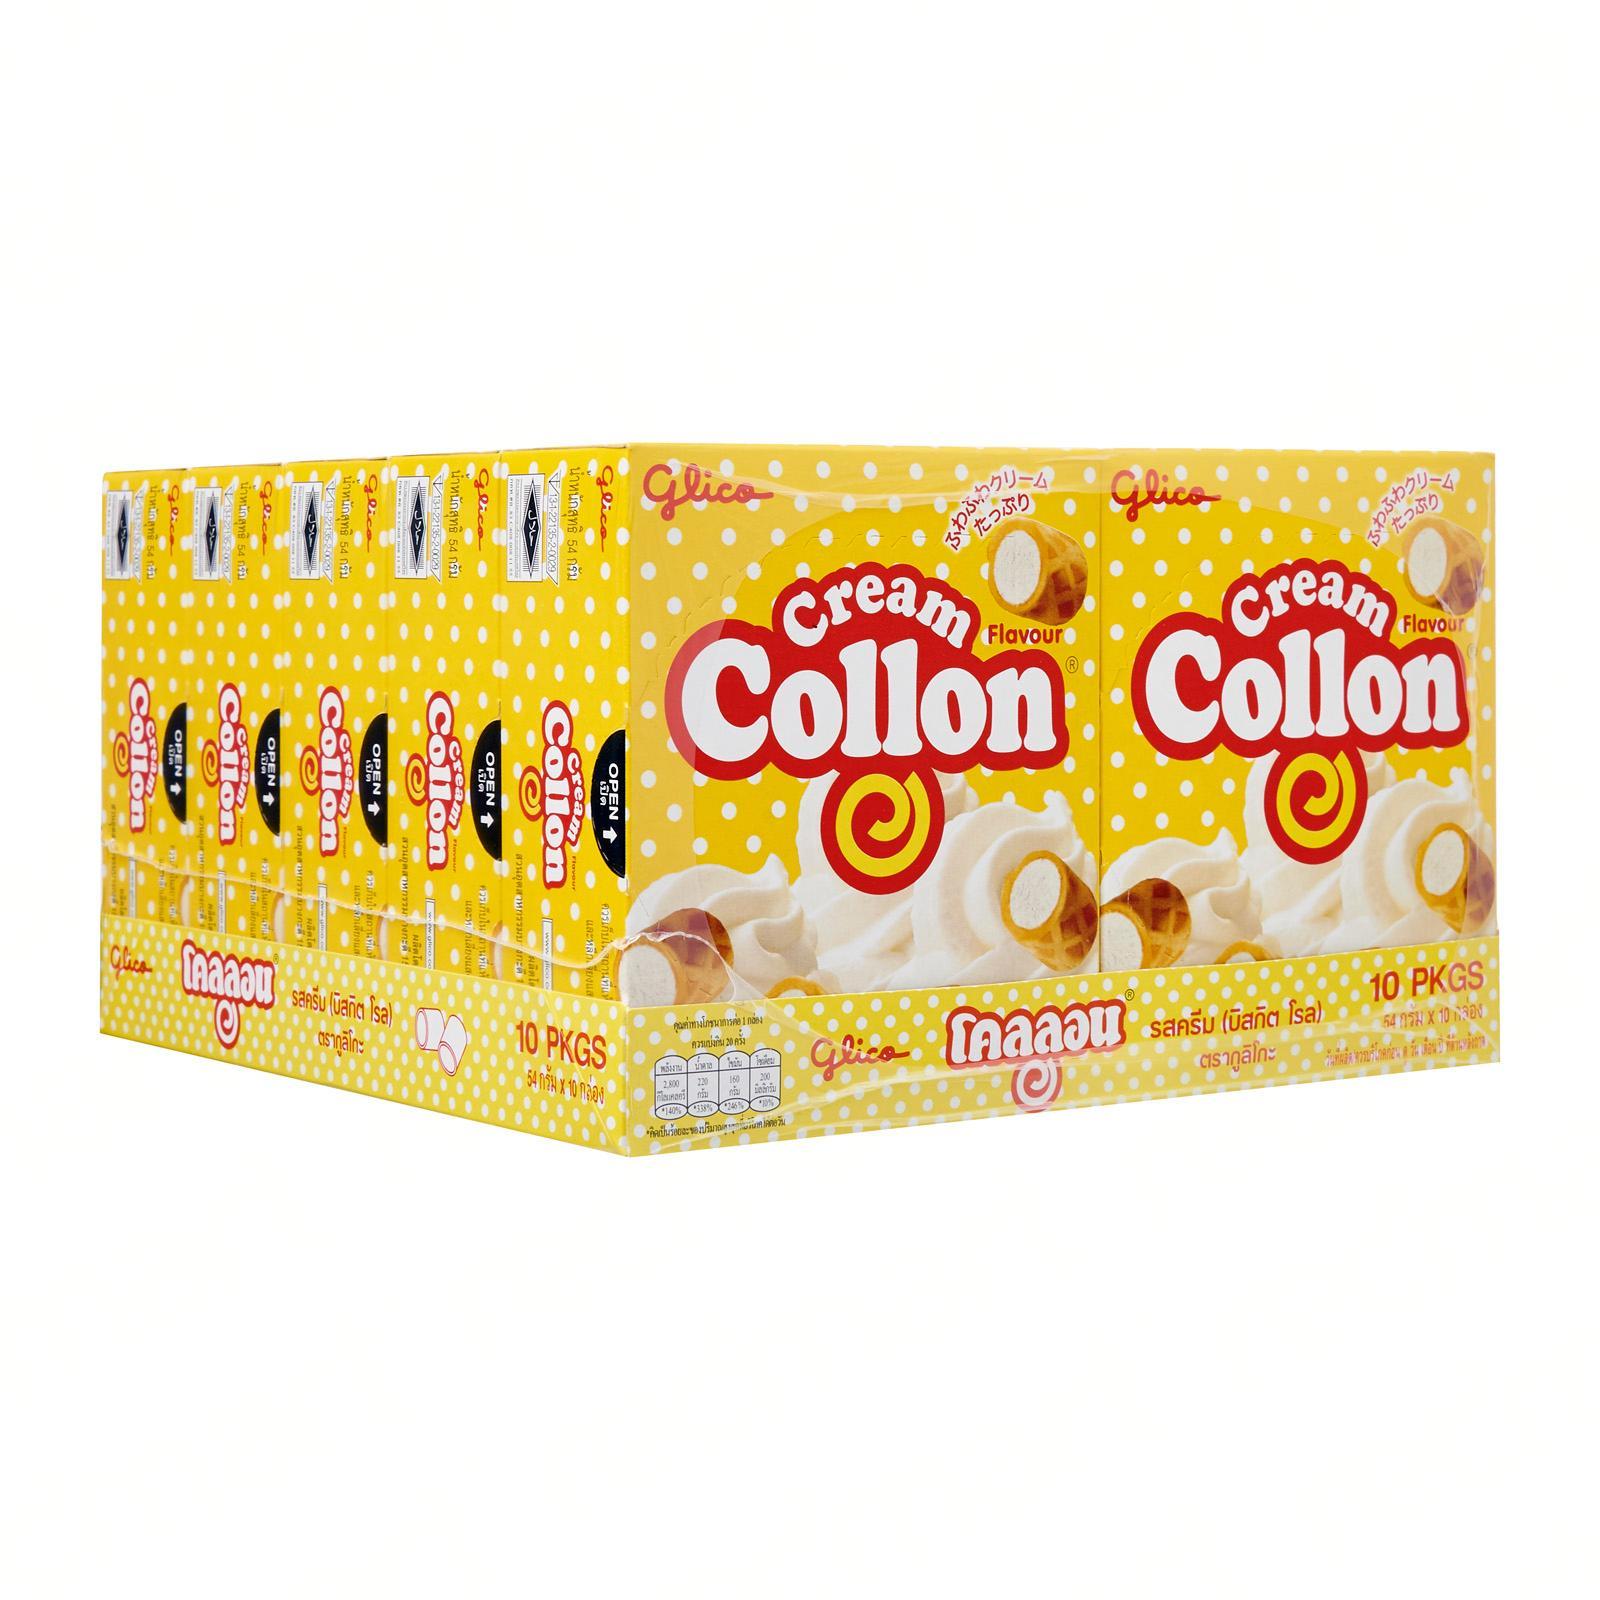 Glico Collon Biscuit Roll with Cream Chocolate Strawberry Flavor Snack x10  boxes